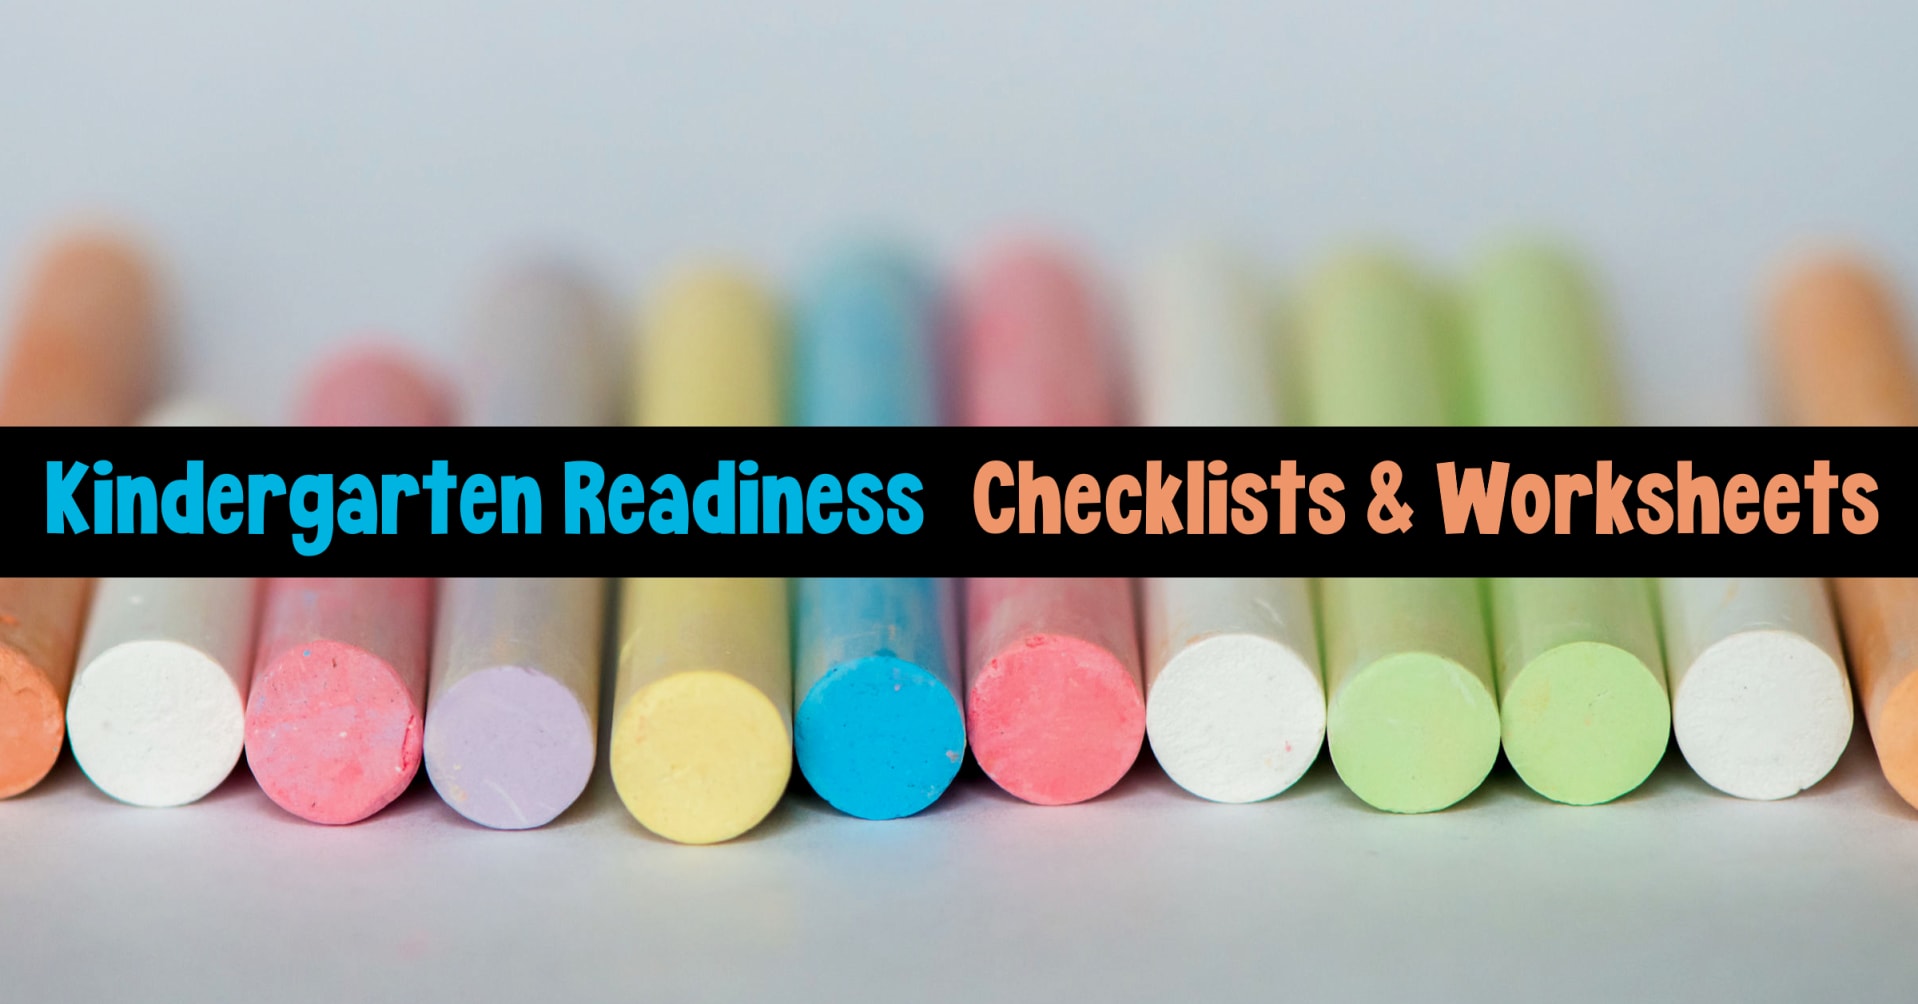 Kindergarten readiness checklist, assessment activities and free printable kindergarten readiness worksheets